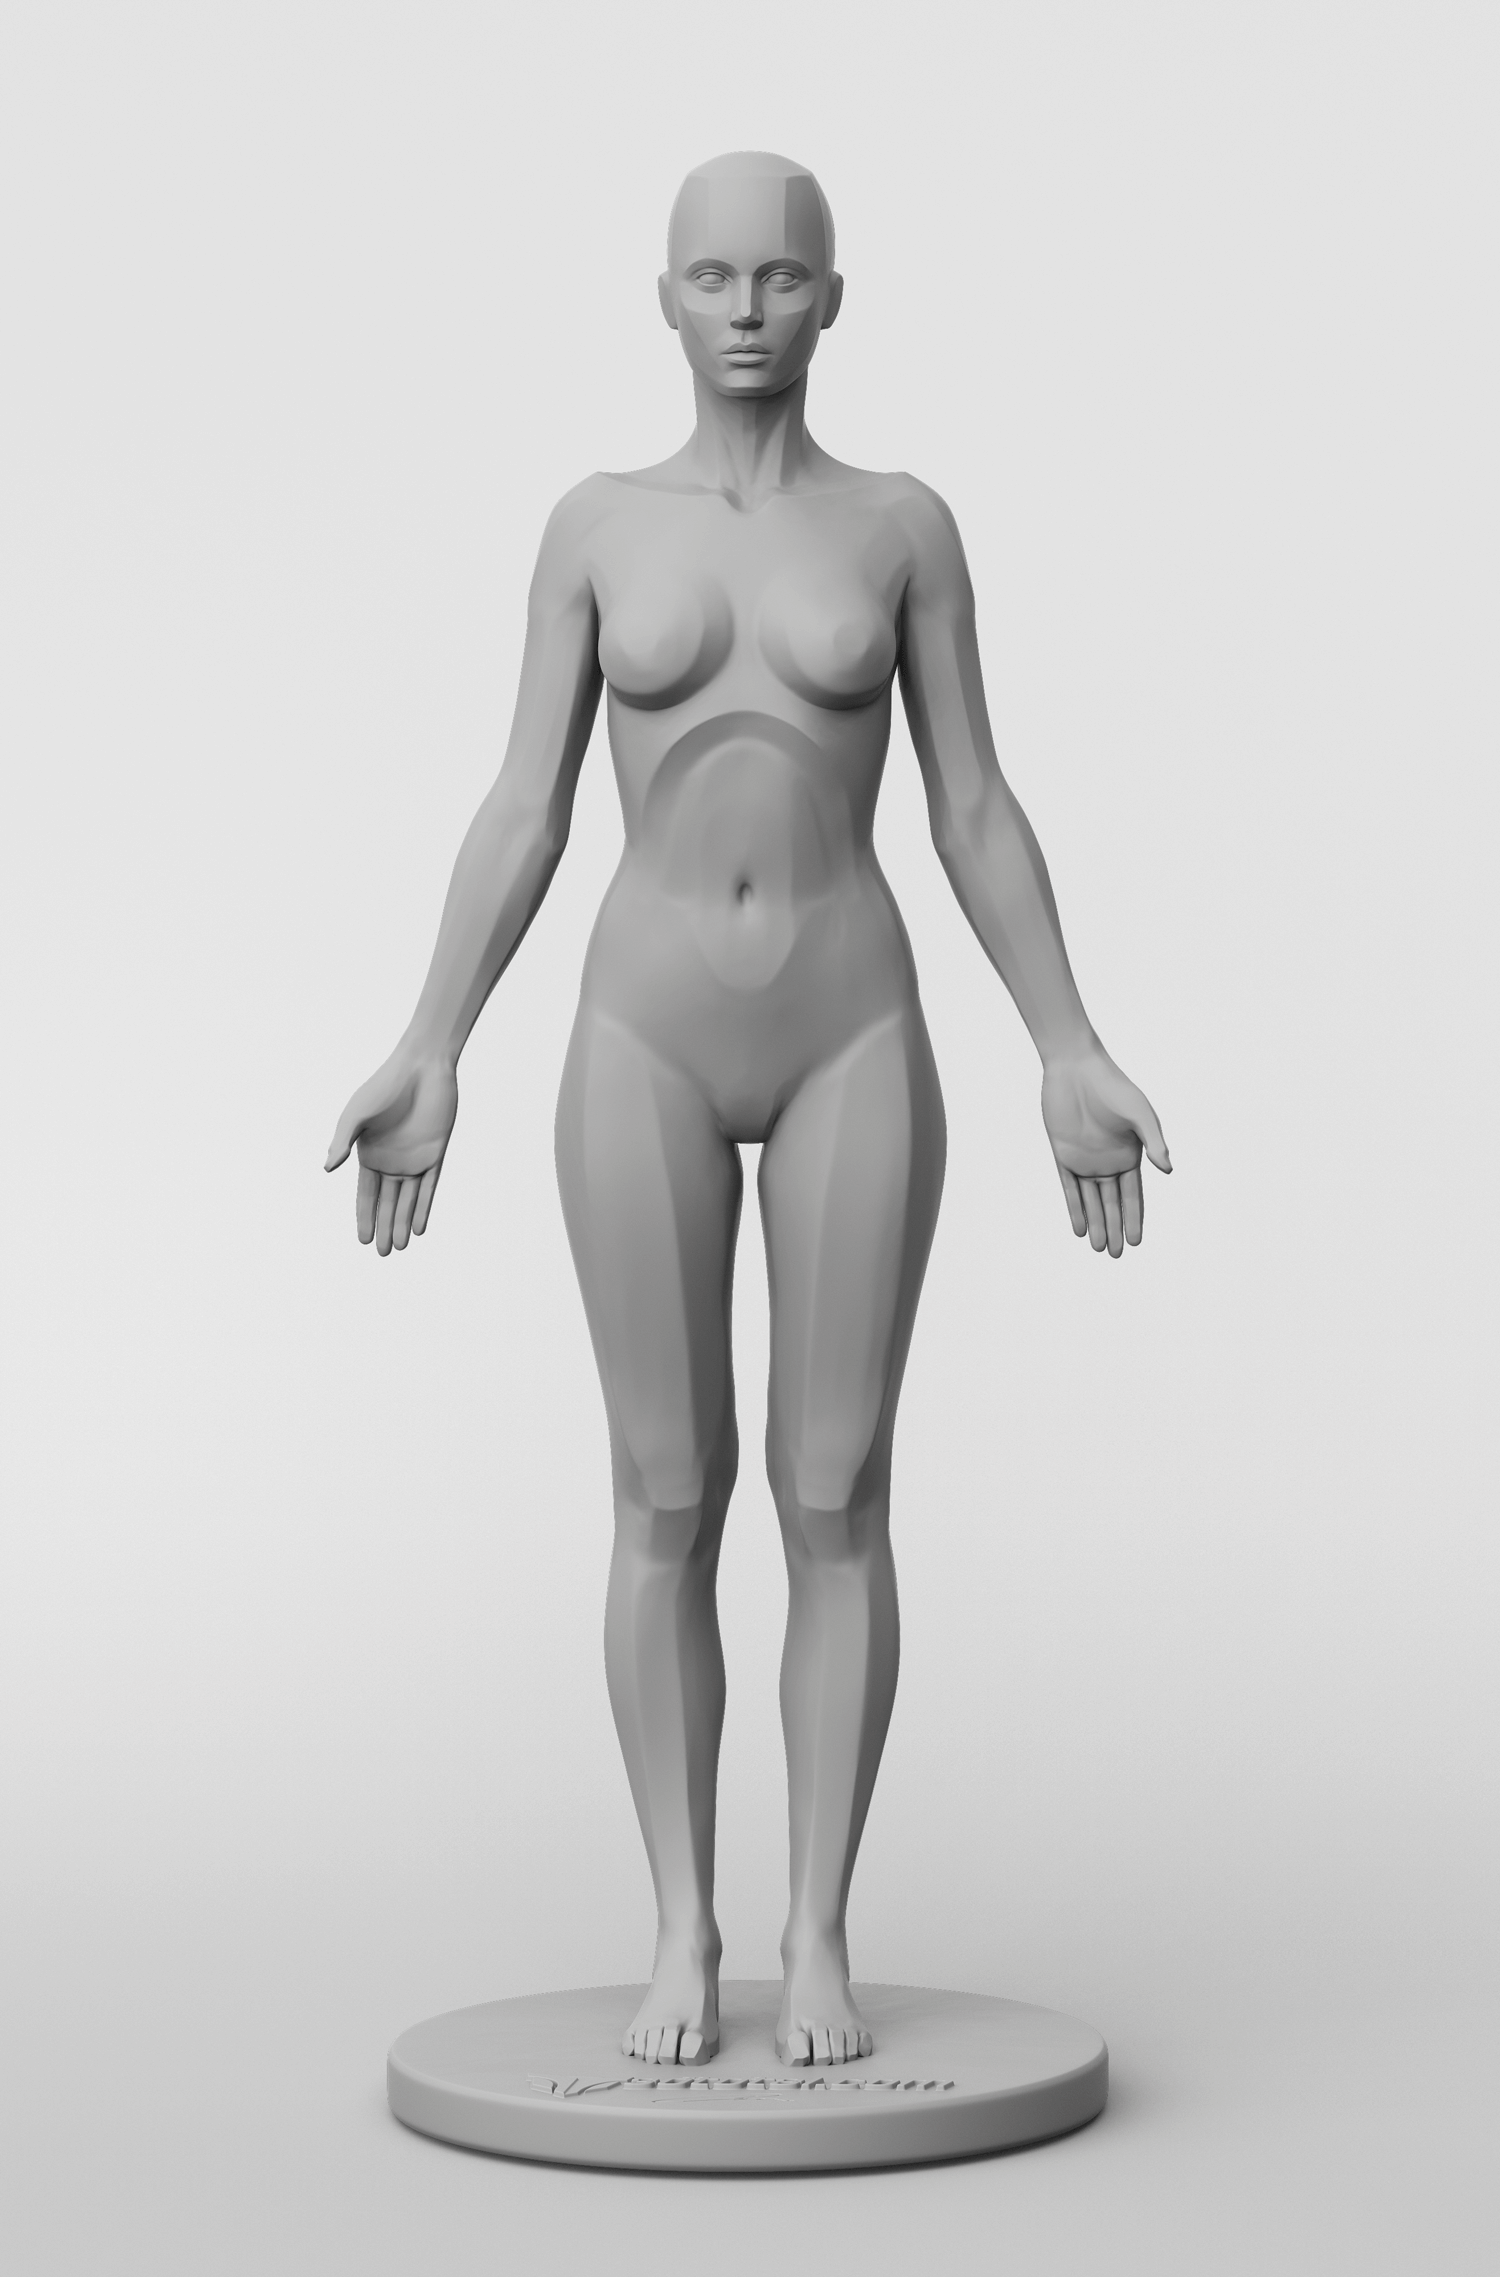 female body reference by wynnter89 on DeviantArt